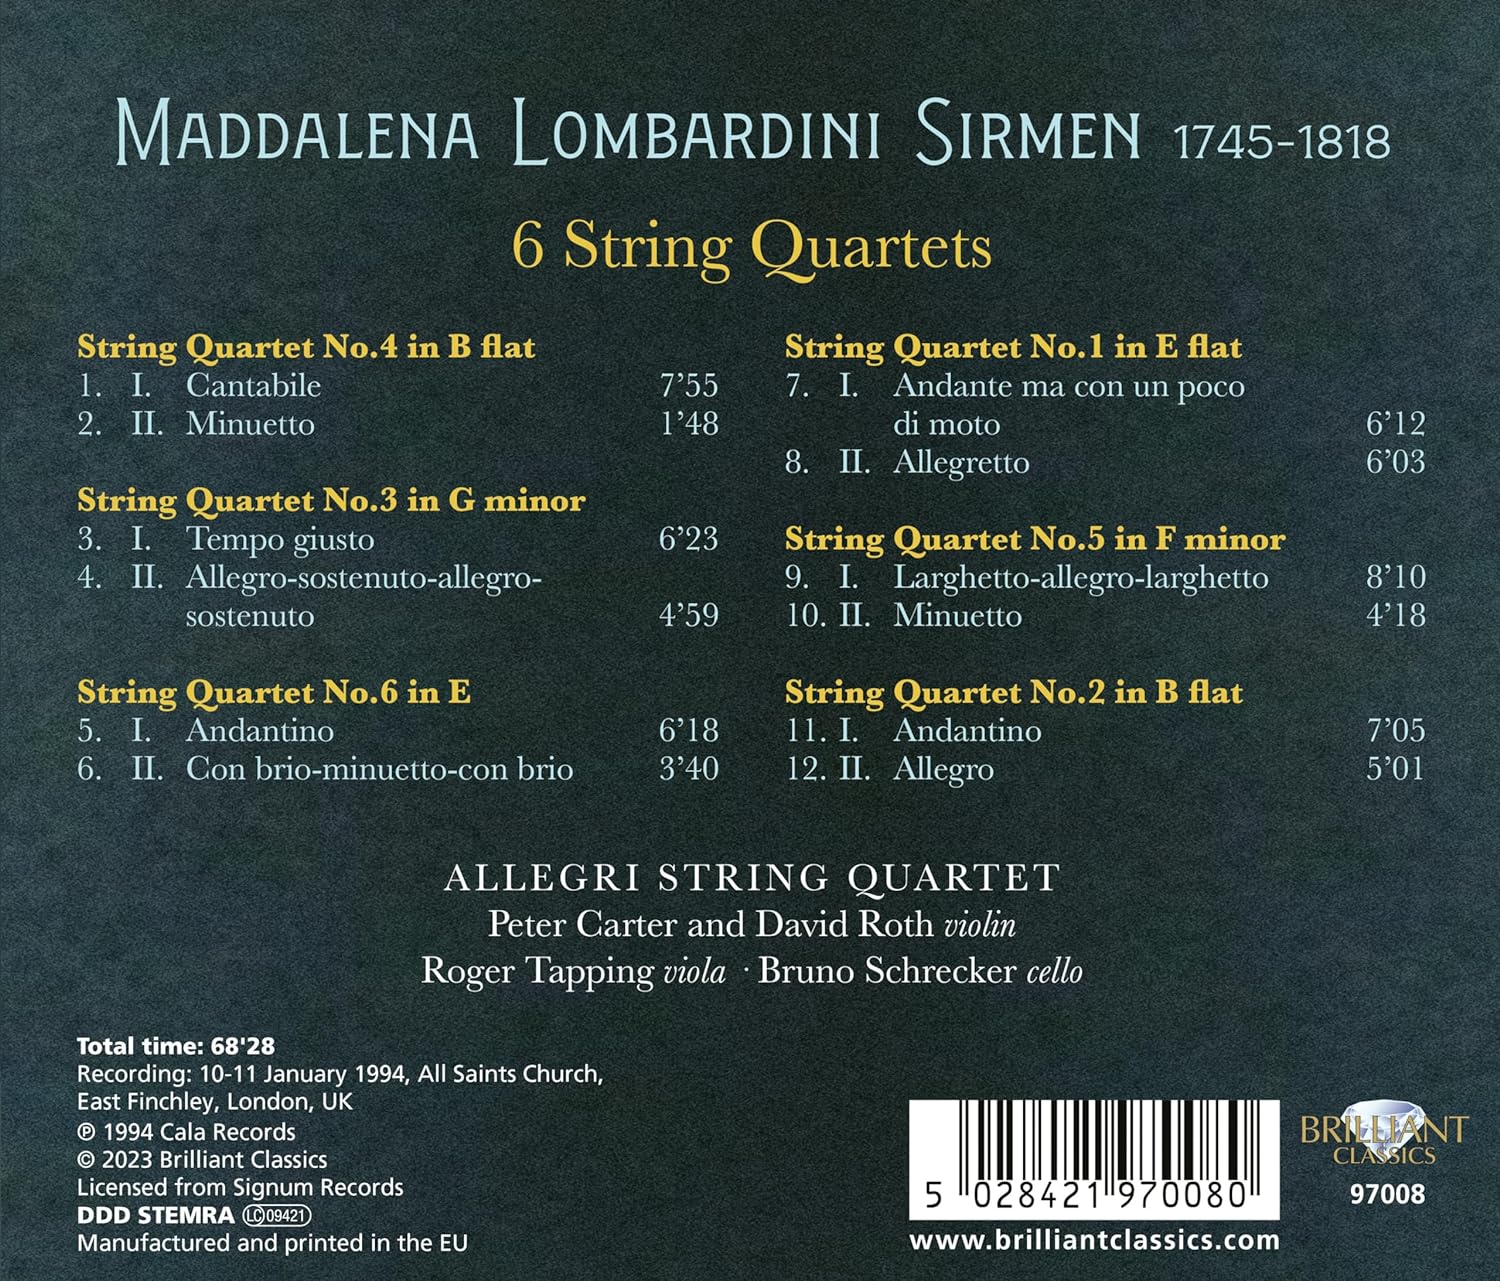 Allegri String Quartet 시르멘: 현악 사중주 1~6번 (Sirmen: 6 String Quartets)